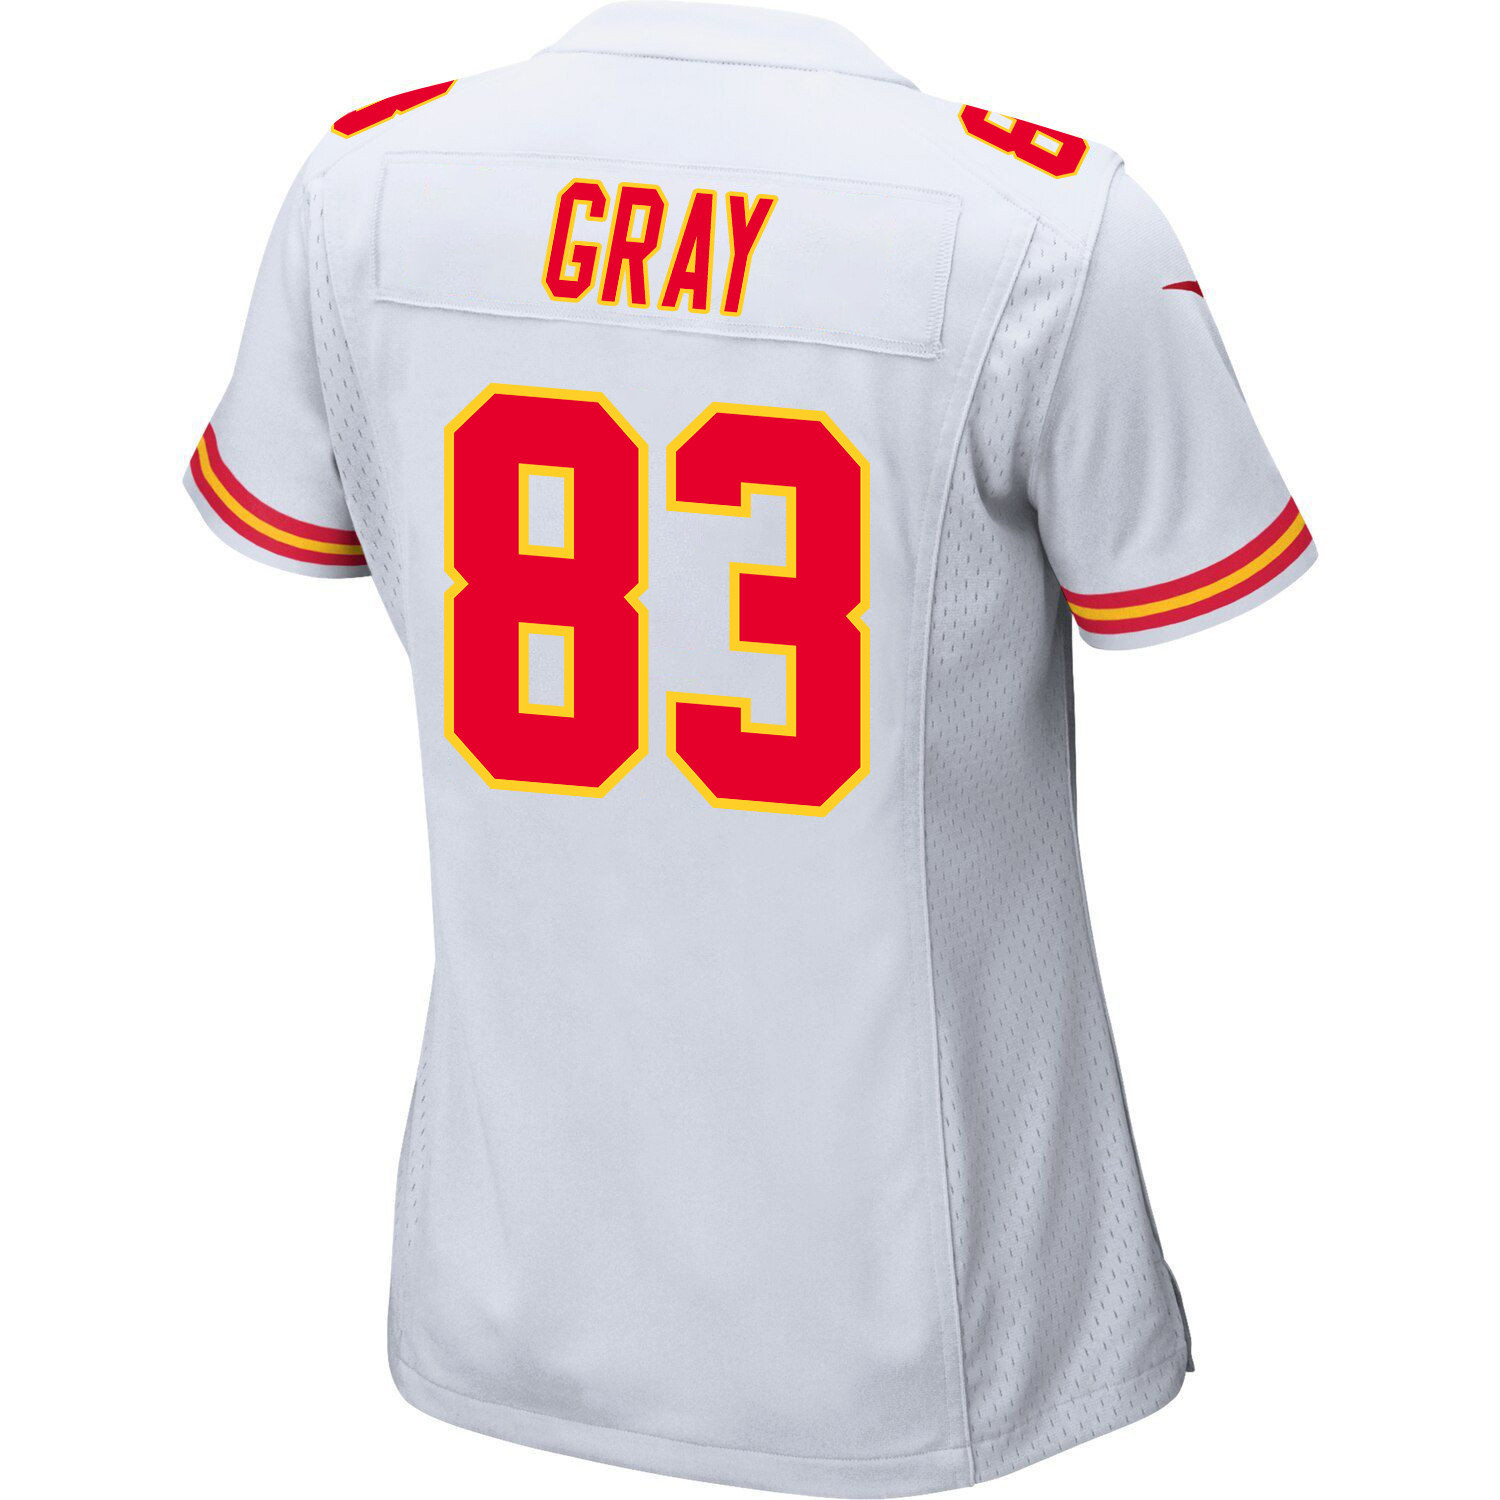 Noah Gray 83 Kansas City Chiefs Super Bowl LVIII Champions 4X Game Women Jersey - White